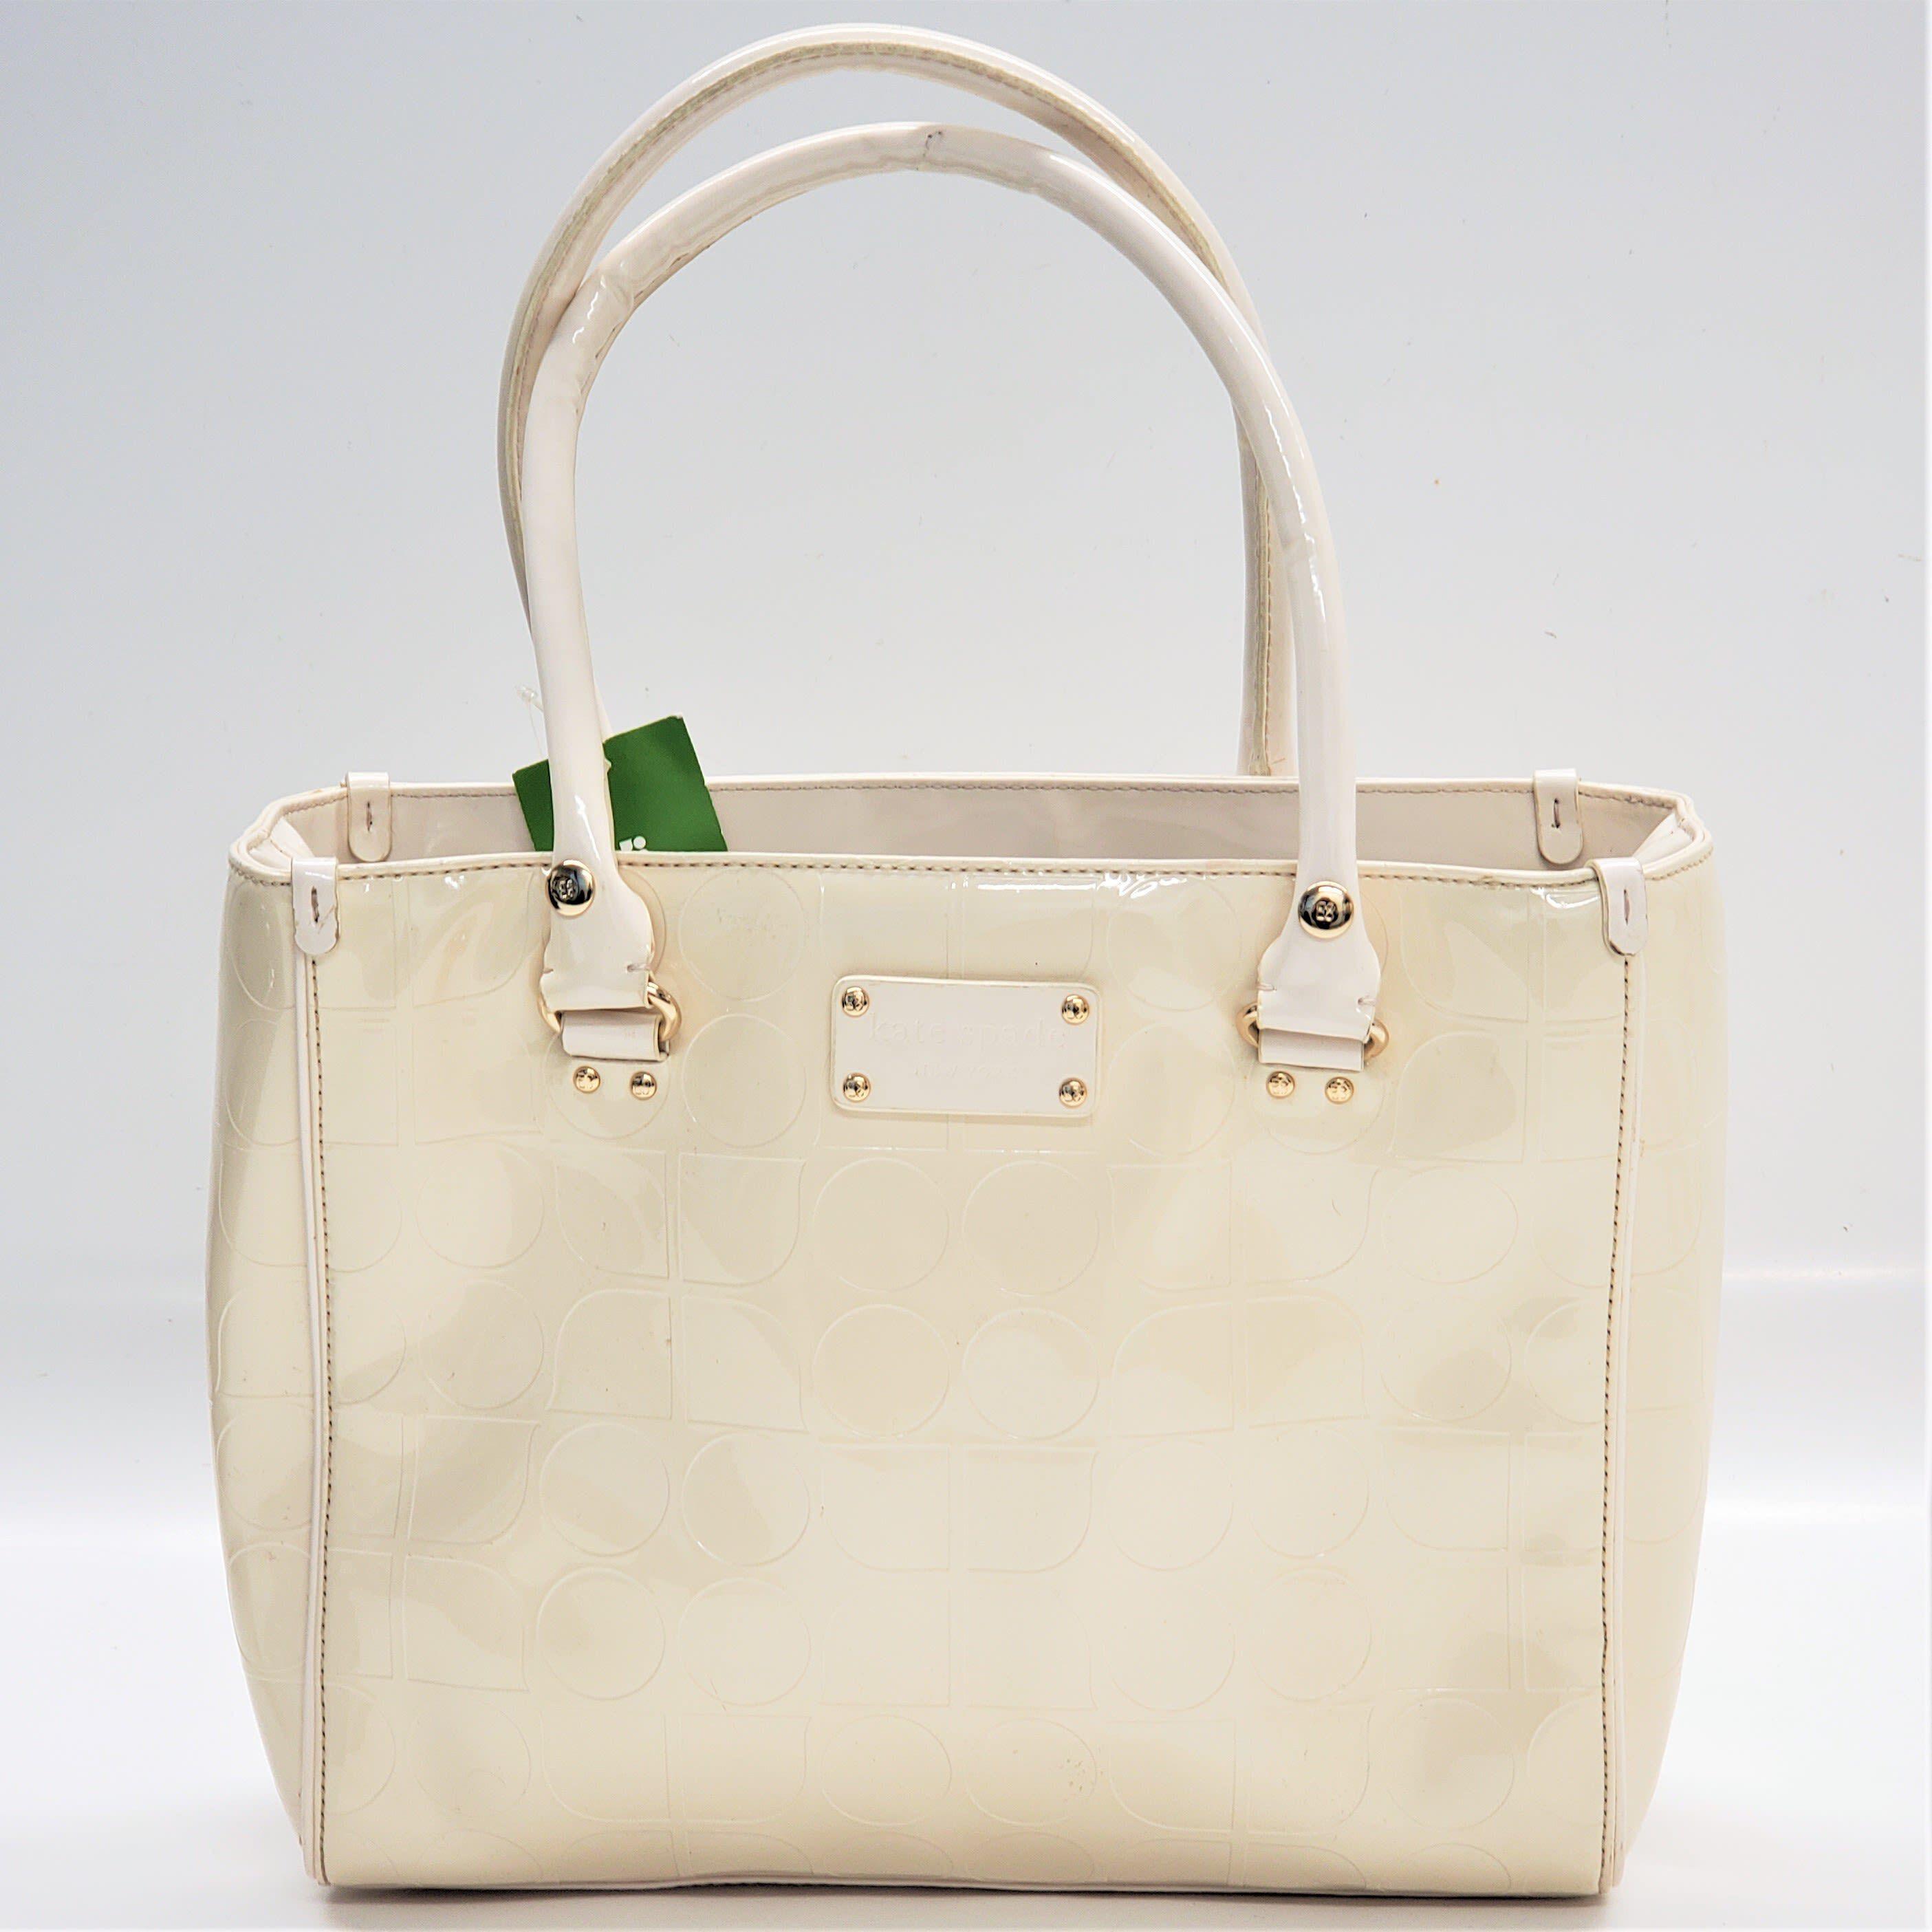 Kate Spade green and white stripe bag | Striped bags, Bags, Kate spade